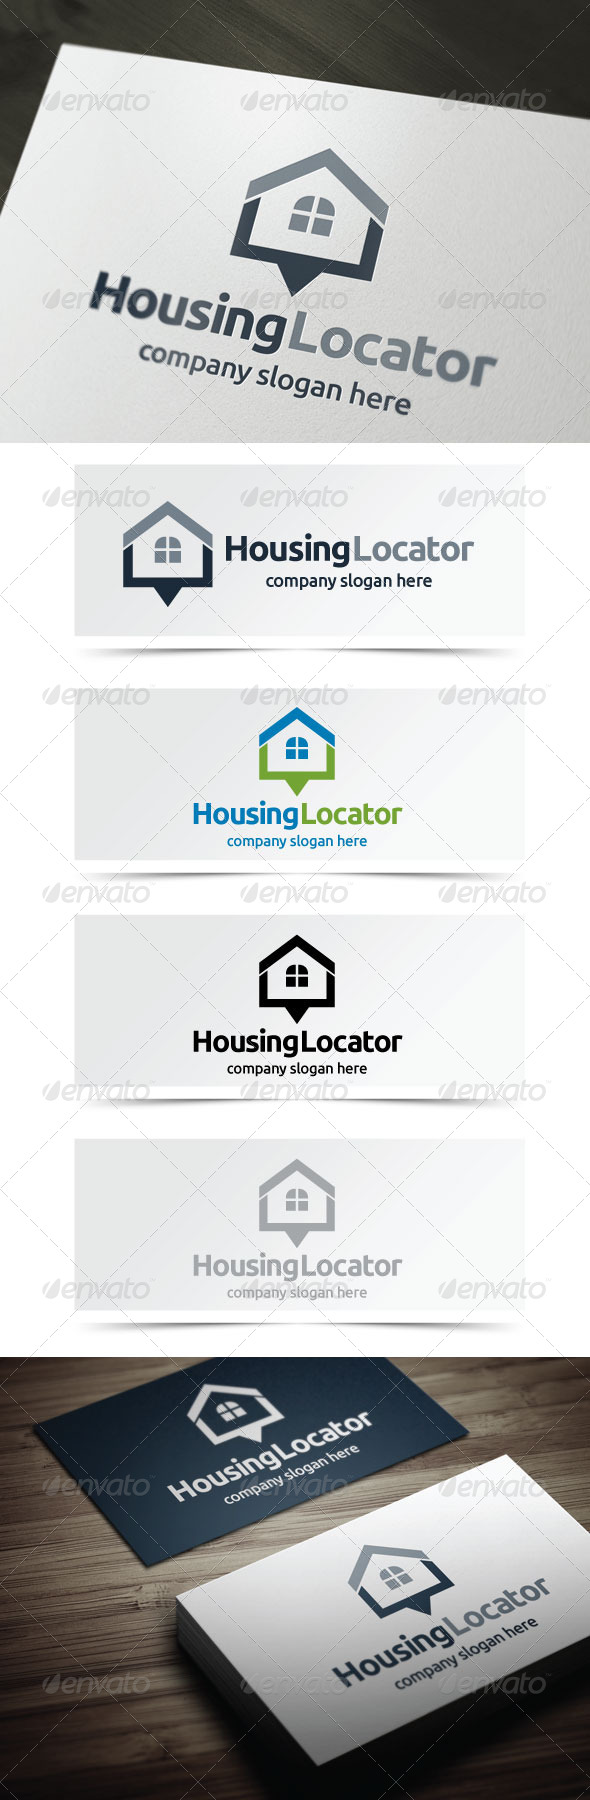 Housing Locator